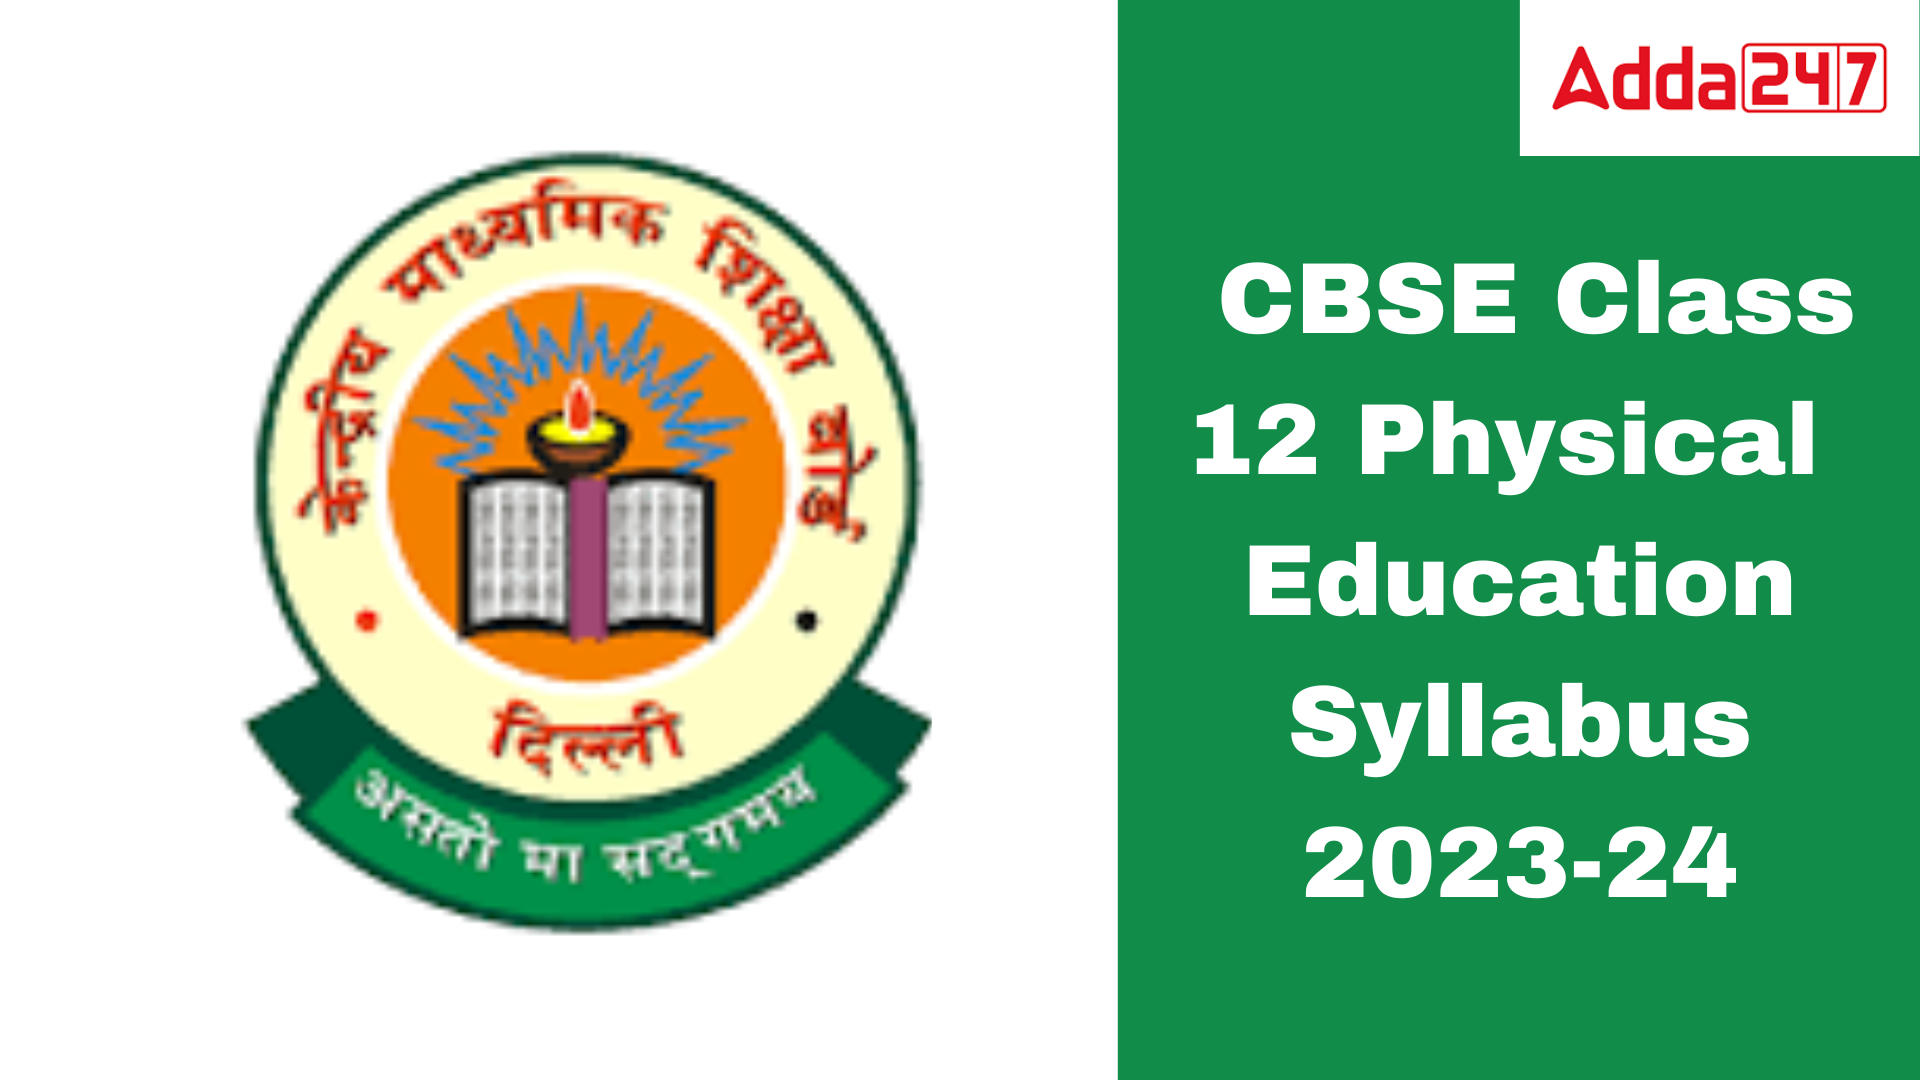 CBSE Class 12 Physical Education Syllabus 2023-24